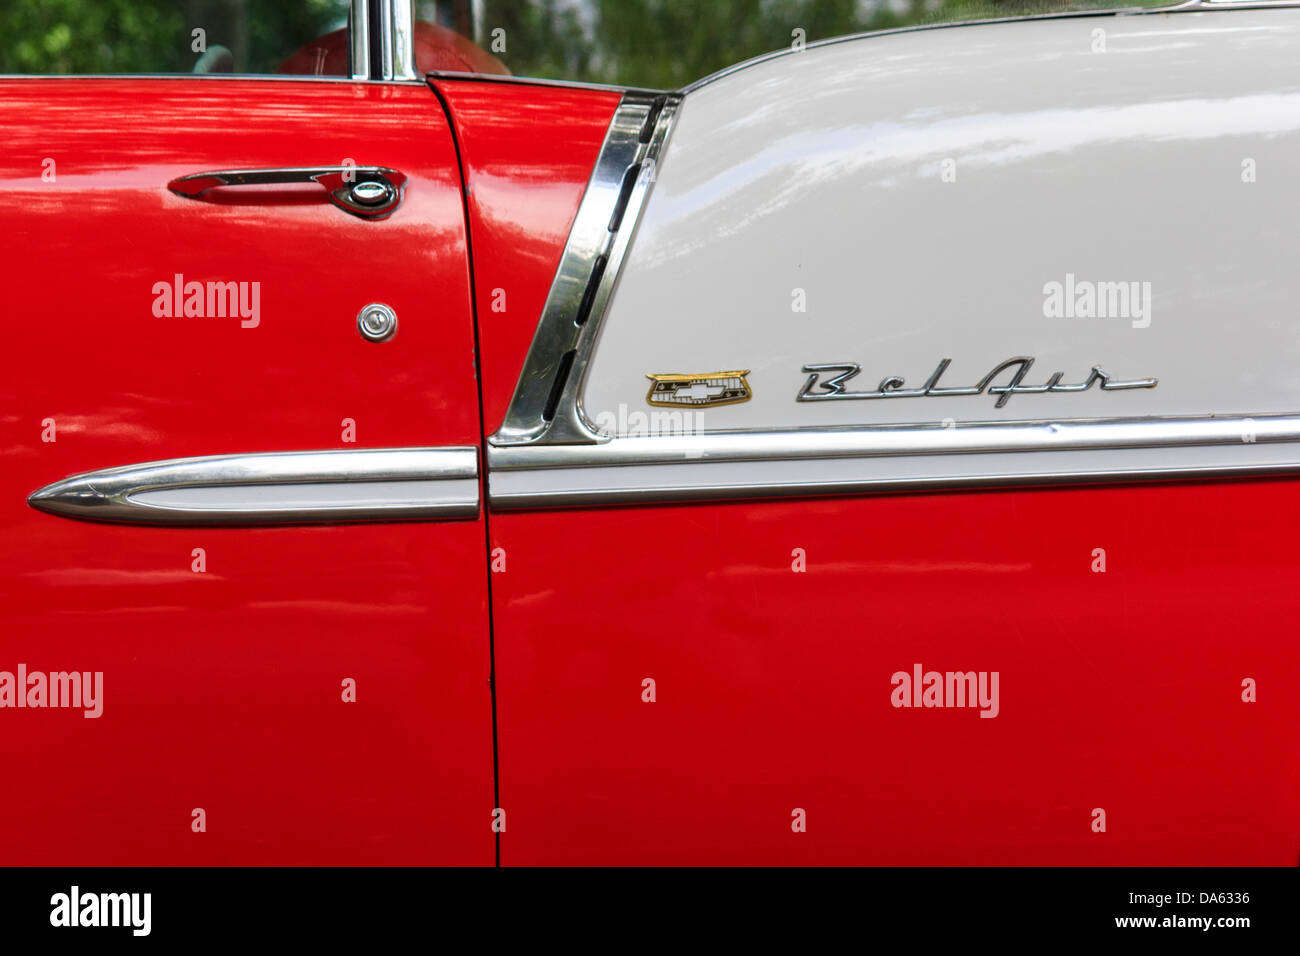 1955, Classic Car, Chevrolet, Bel Air, General Motors, New Braunfels, viejo coche, rojo, blanco, Texas, Estados Unidos, Estados Unidos, América, v Foto de stock